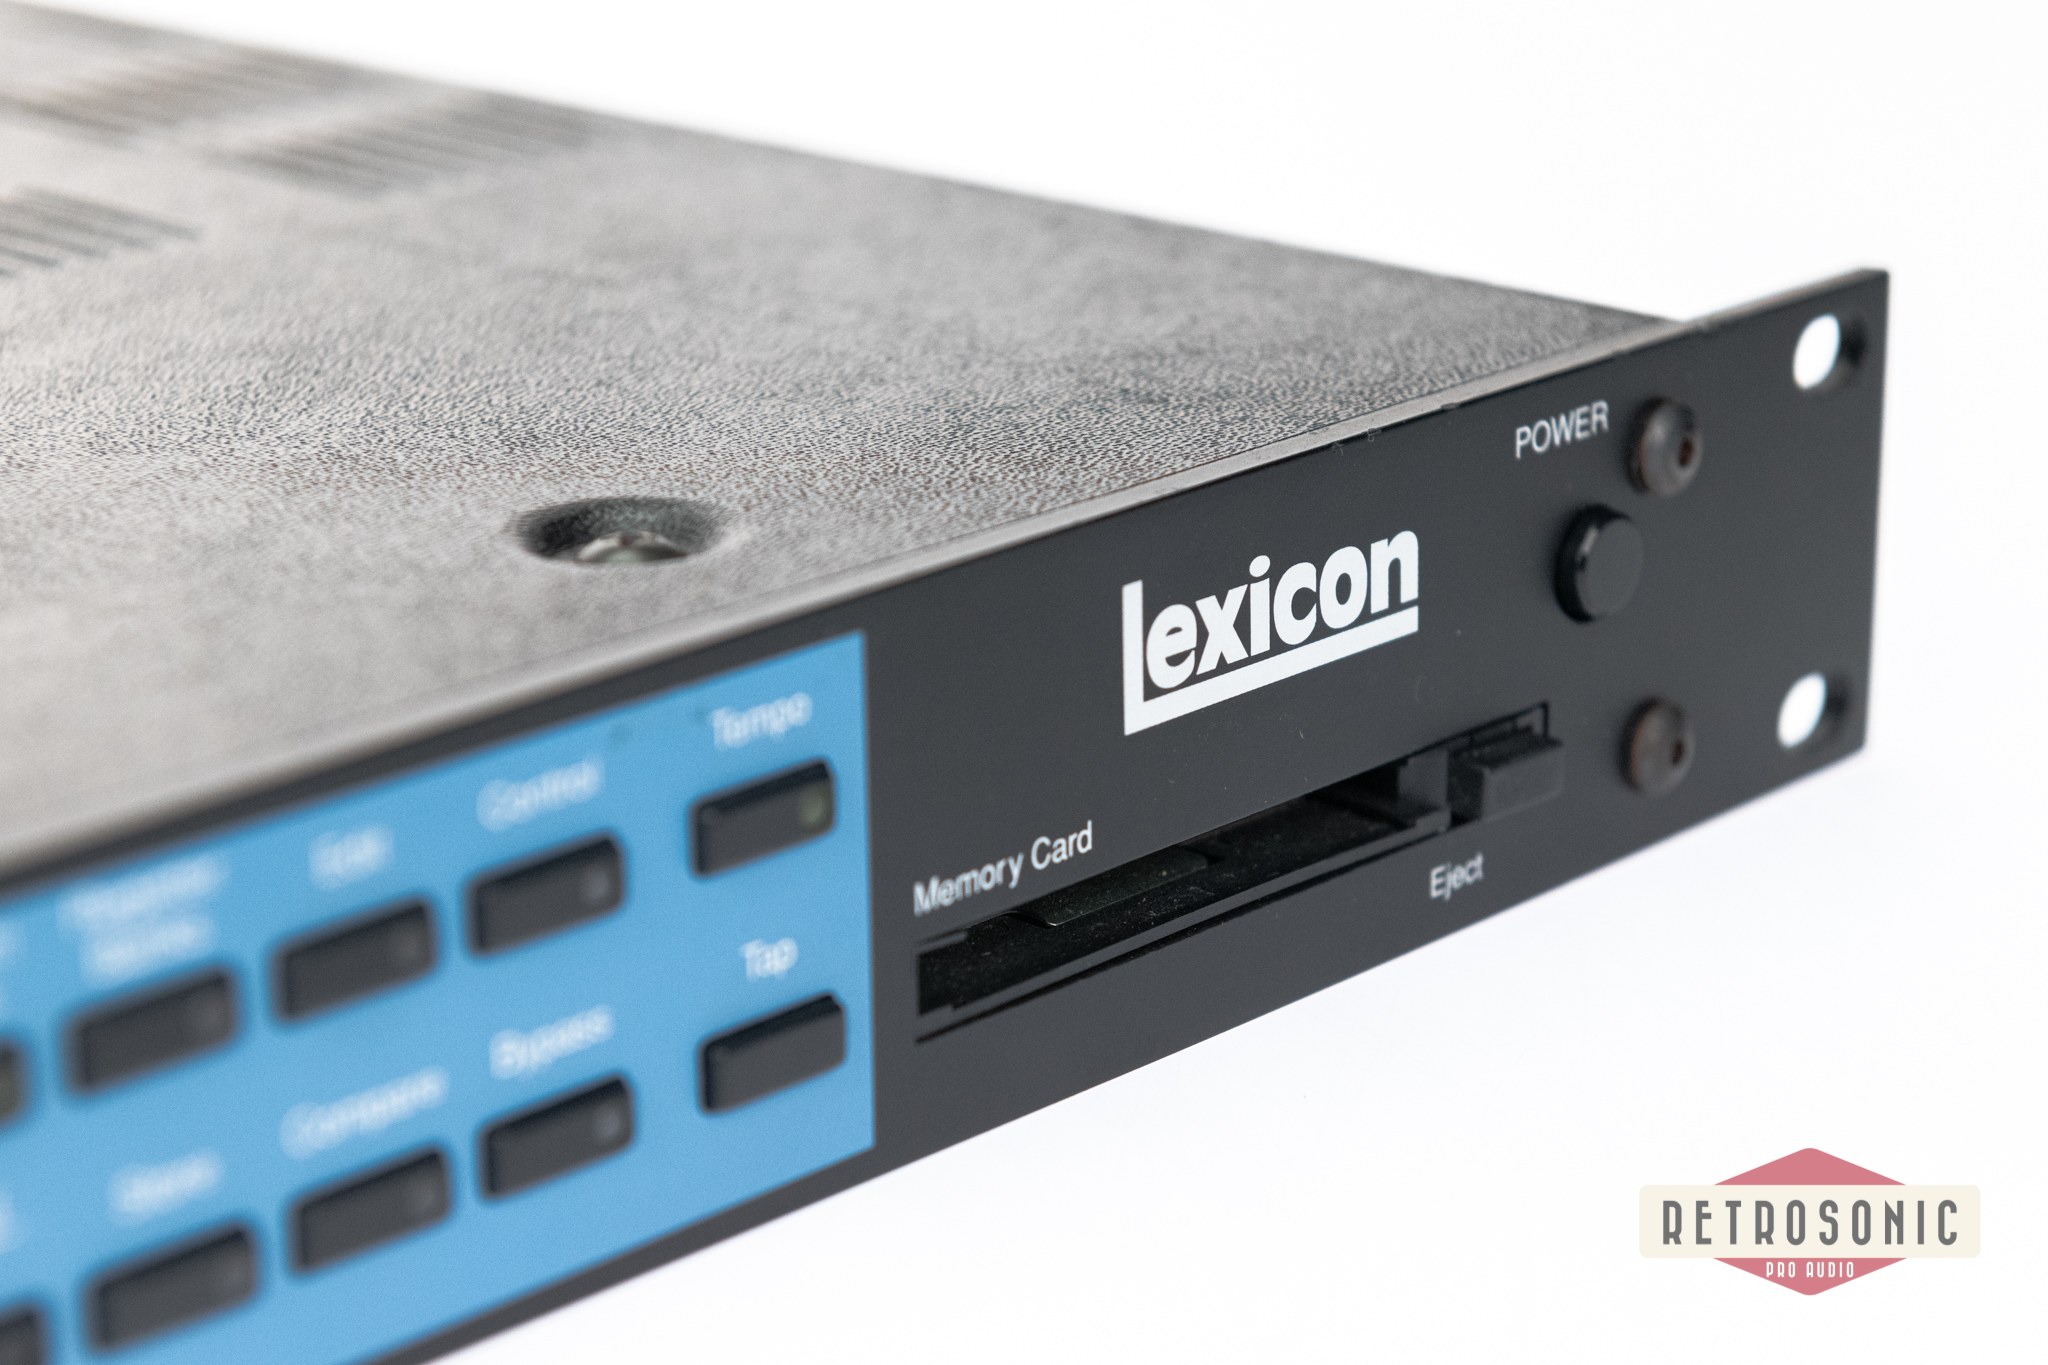 Lexicon PCM 90 Digital Reverb Processor